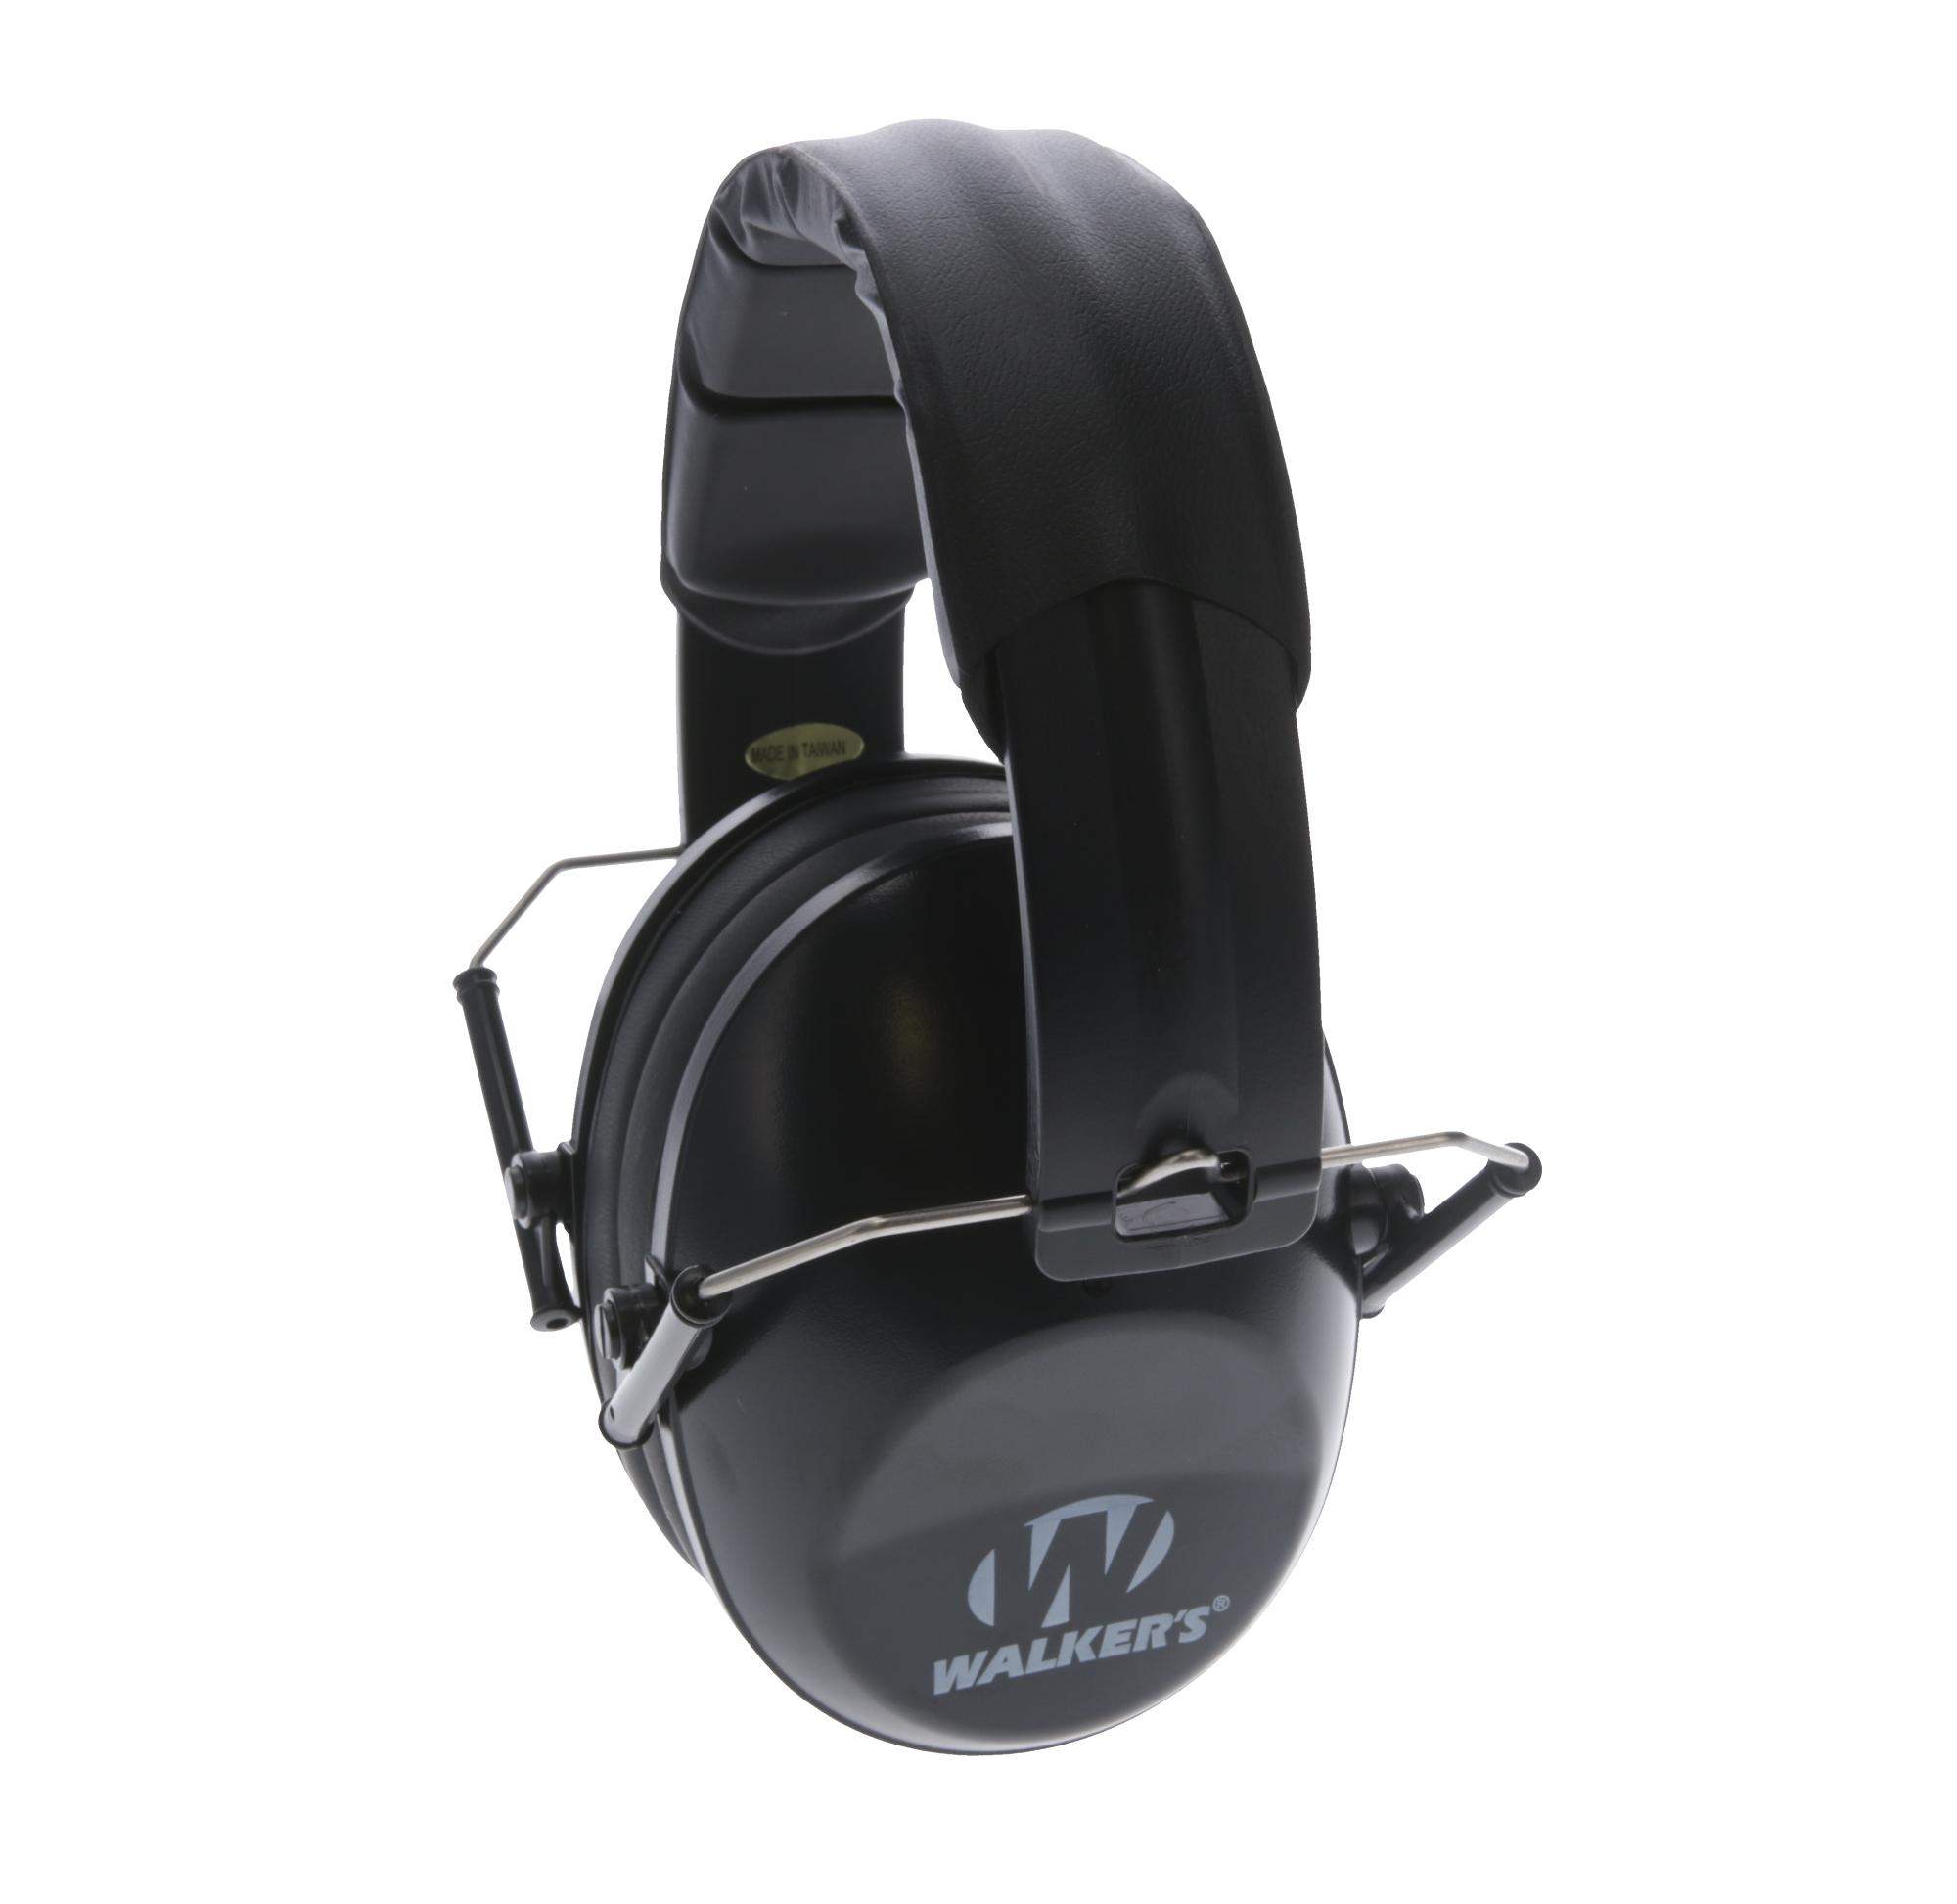 Black Walker’s Game Ear Pro Low Muff Hearing Protector GWPFPM1 for sale online 